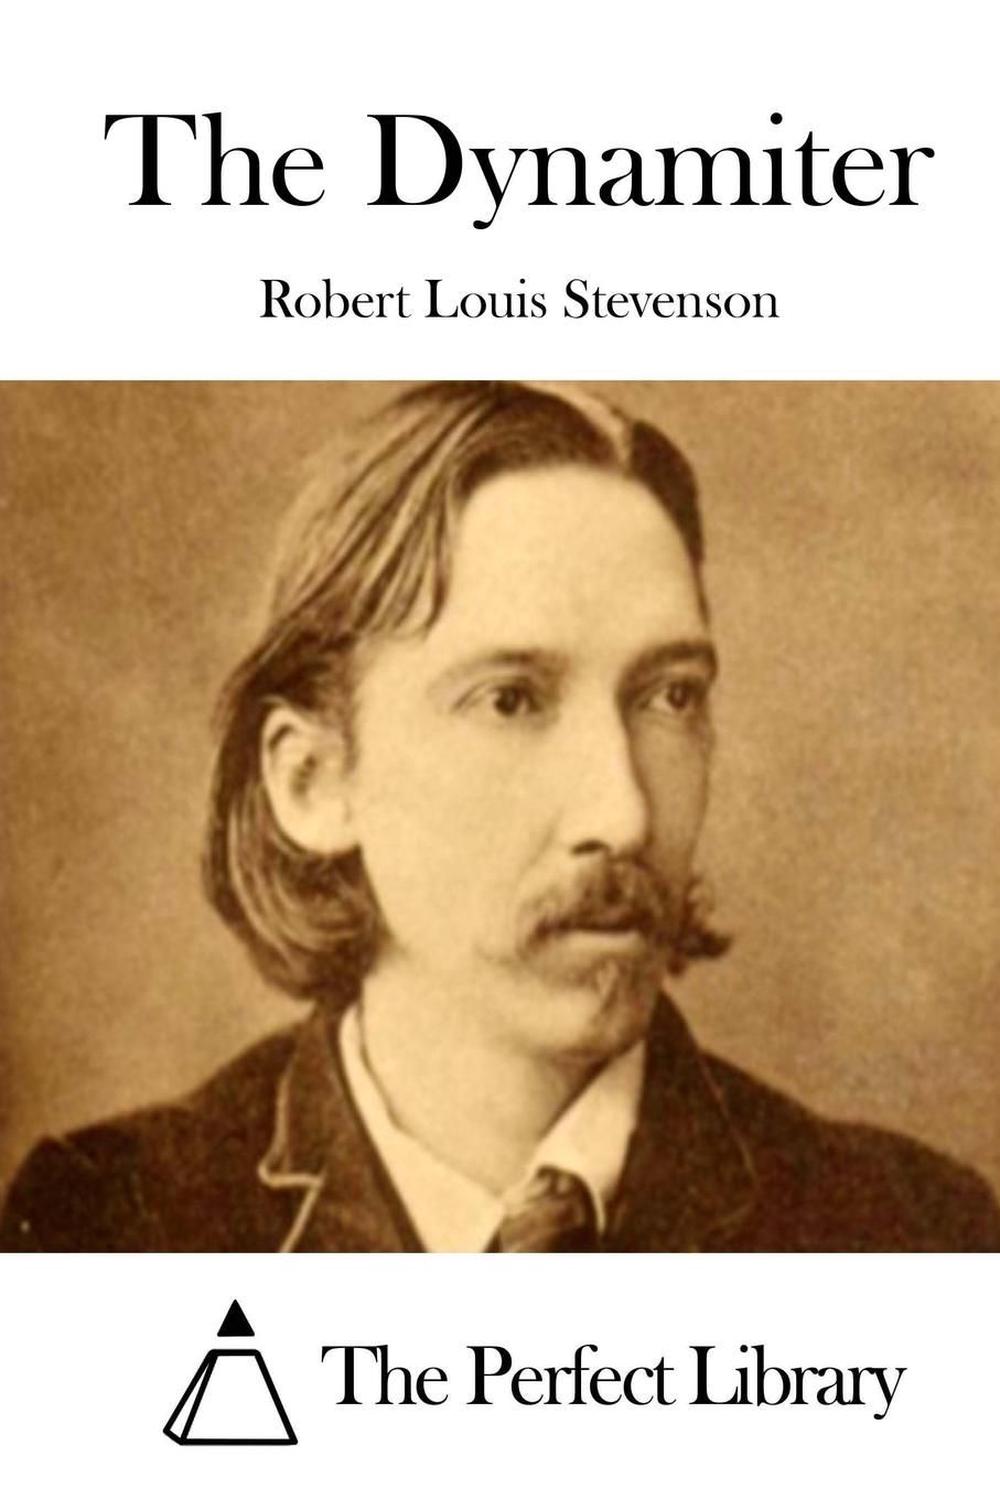 The Dynamiter by Robert Louis Stevenson (English) Paperback Book Free Shipping! 9781512202687 | eBay